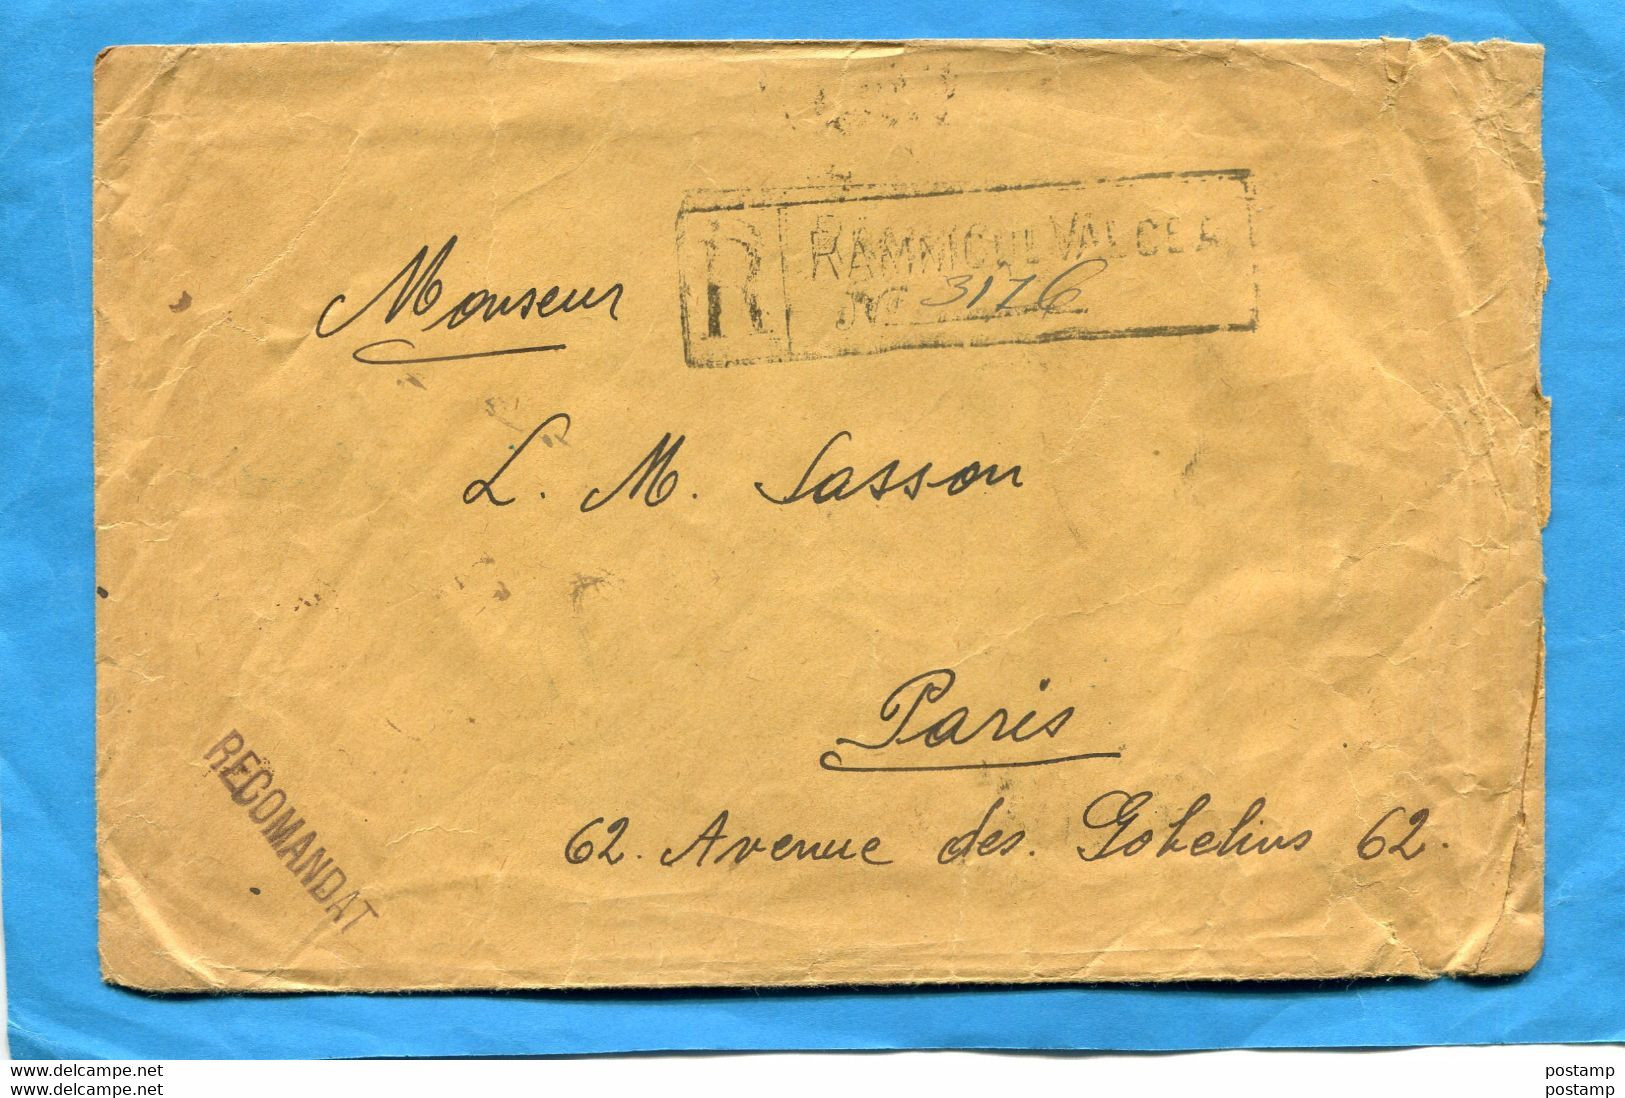 MARCOPHILIE-ROUMANIE--Lettre Recommandée Cad R VALOCEA  1922 -Affranchissement 12 Timbres Verso - Postmark Collection